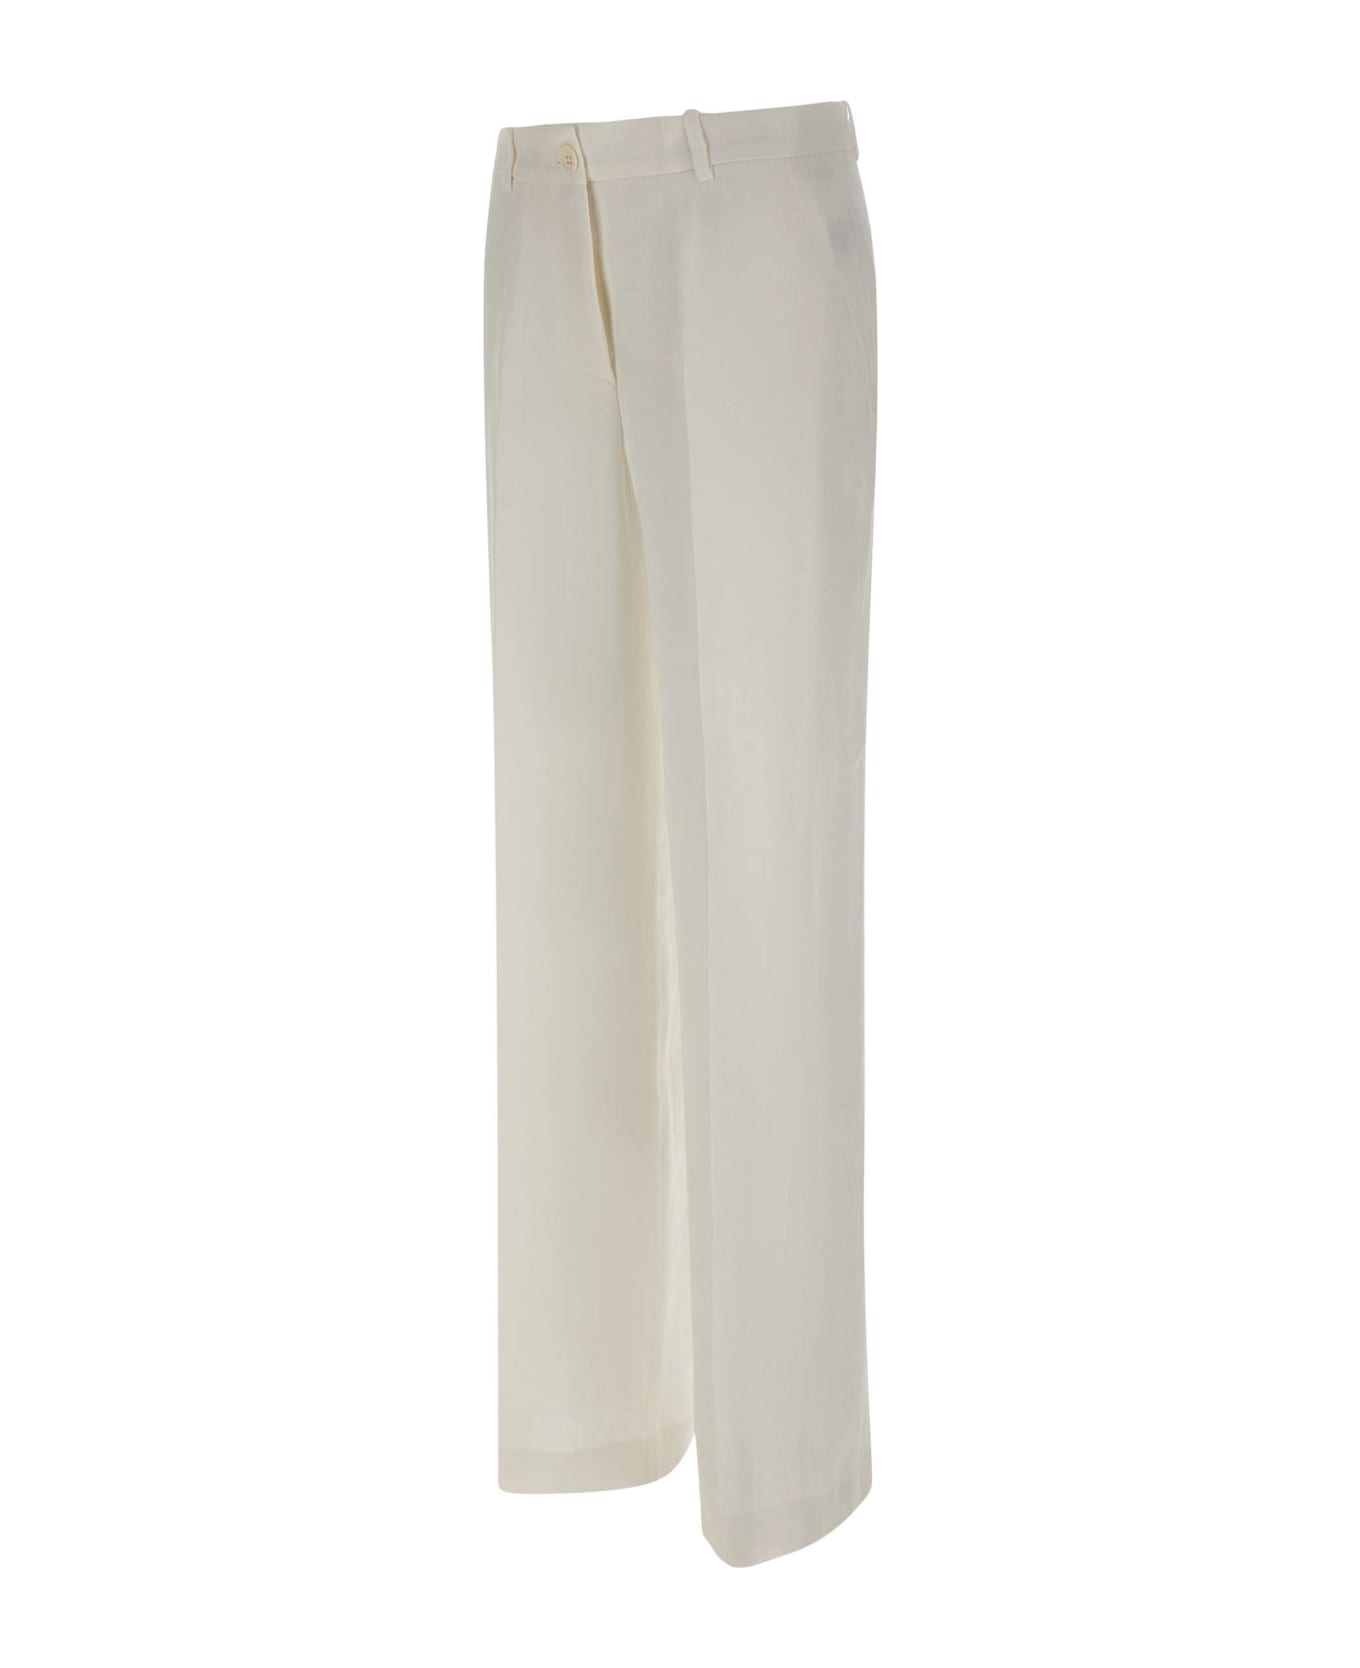 Parosh "blitz" Linen Trousers - WHITE